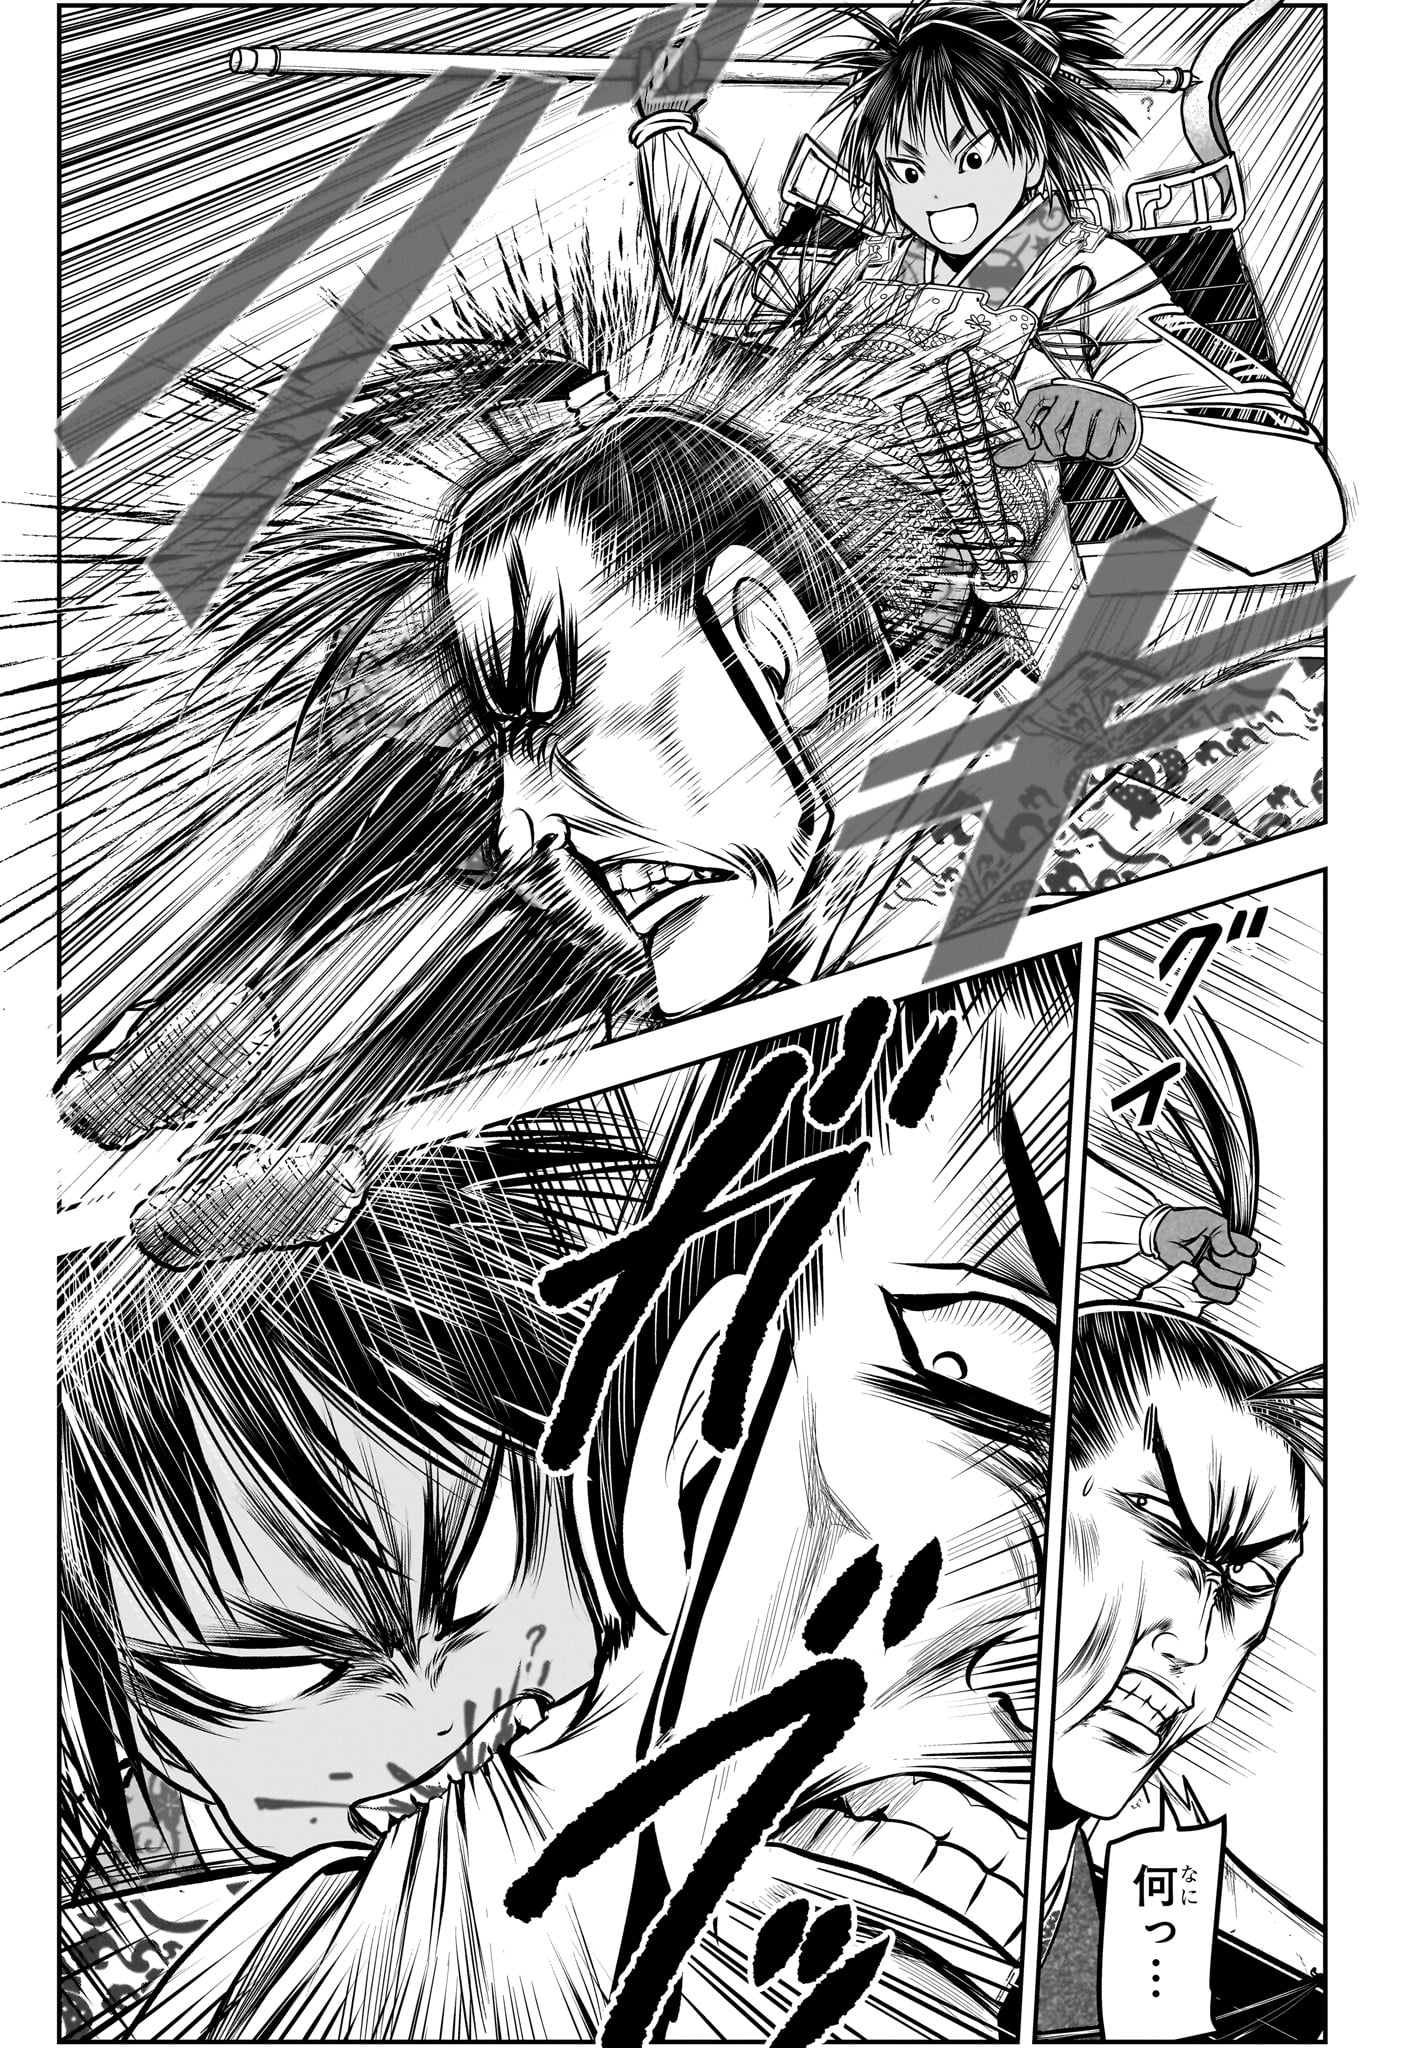 Nige Jouzu no Wakagimi - Chapter 159 - Page 5